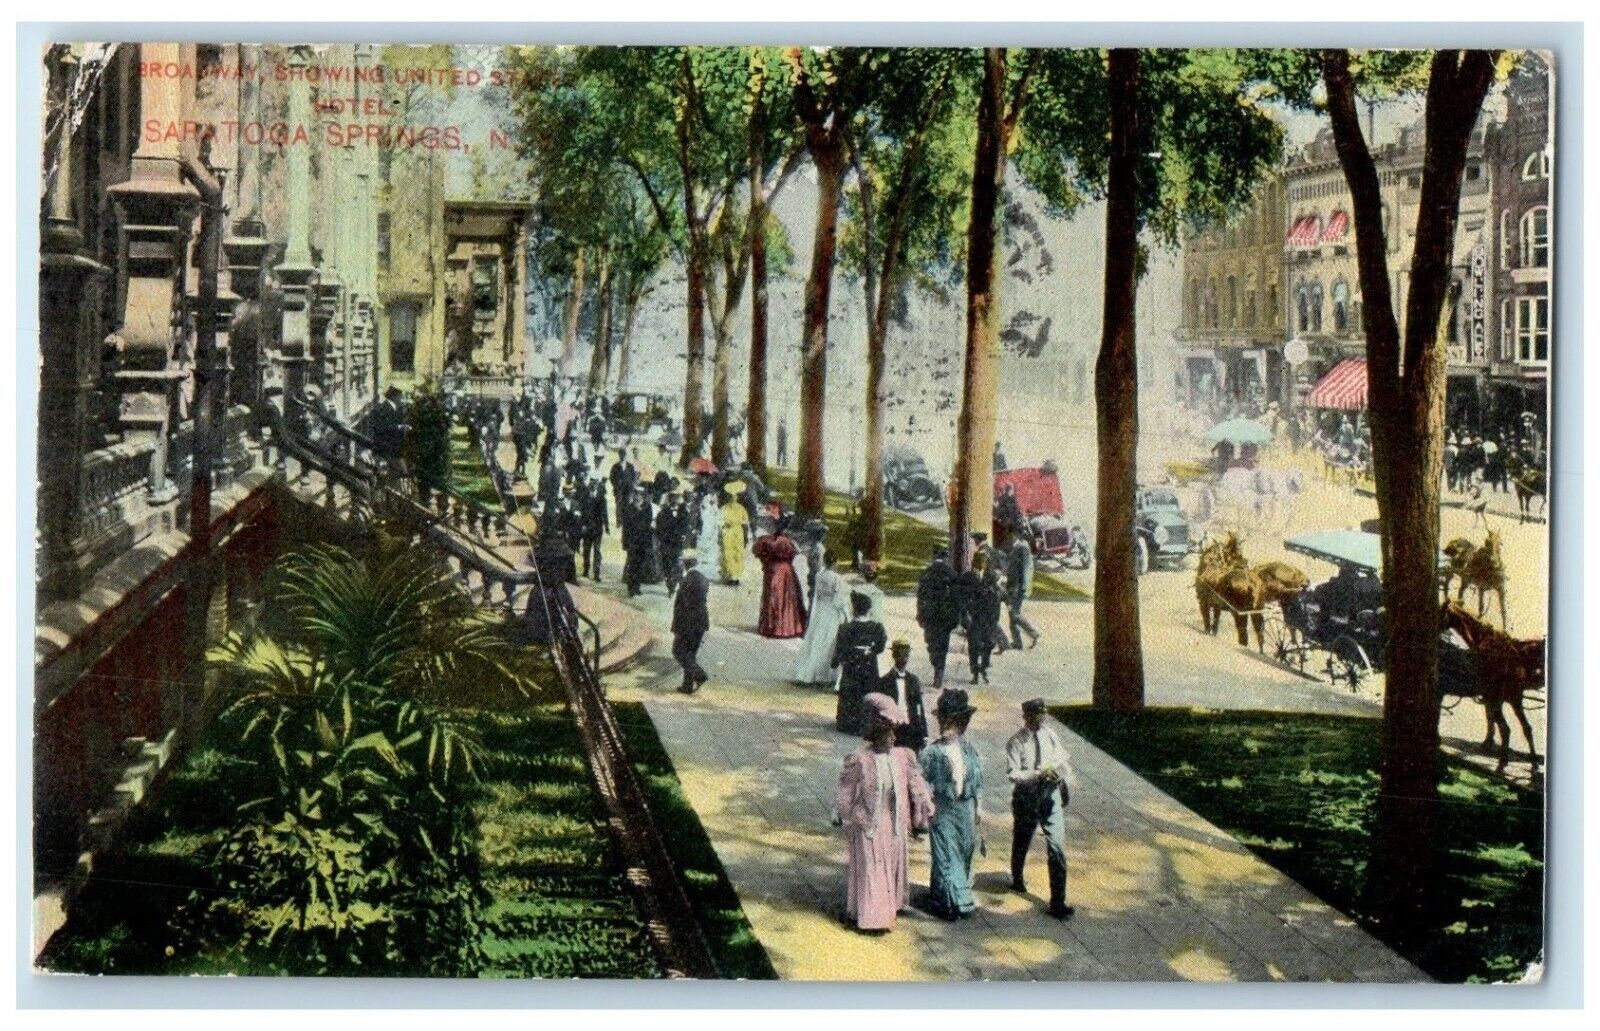 Saratoga Springs New York NY Postcard Broadway Showing United States Hotel 1909